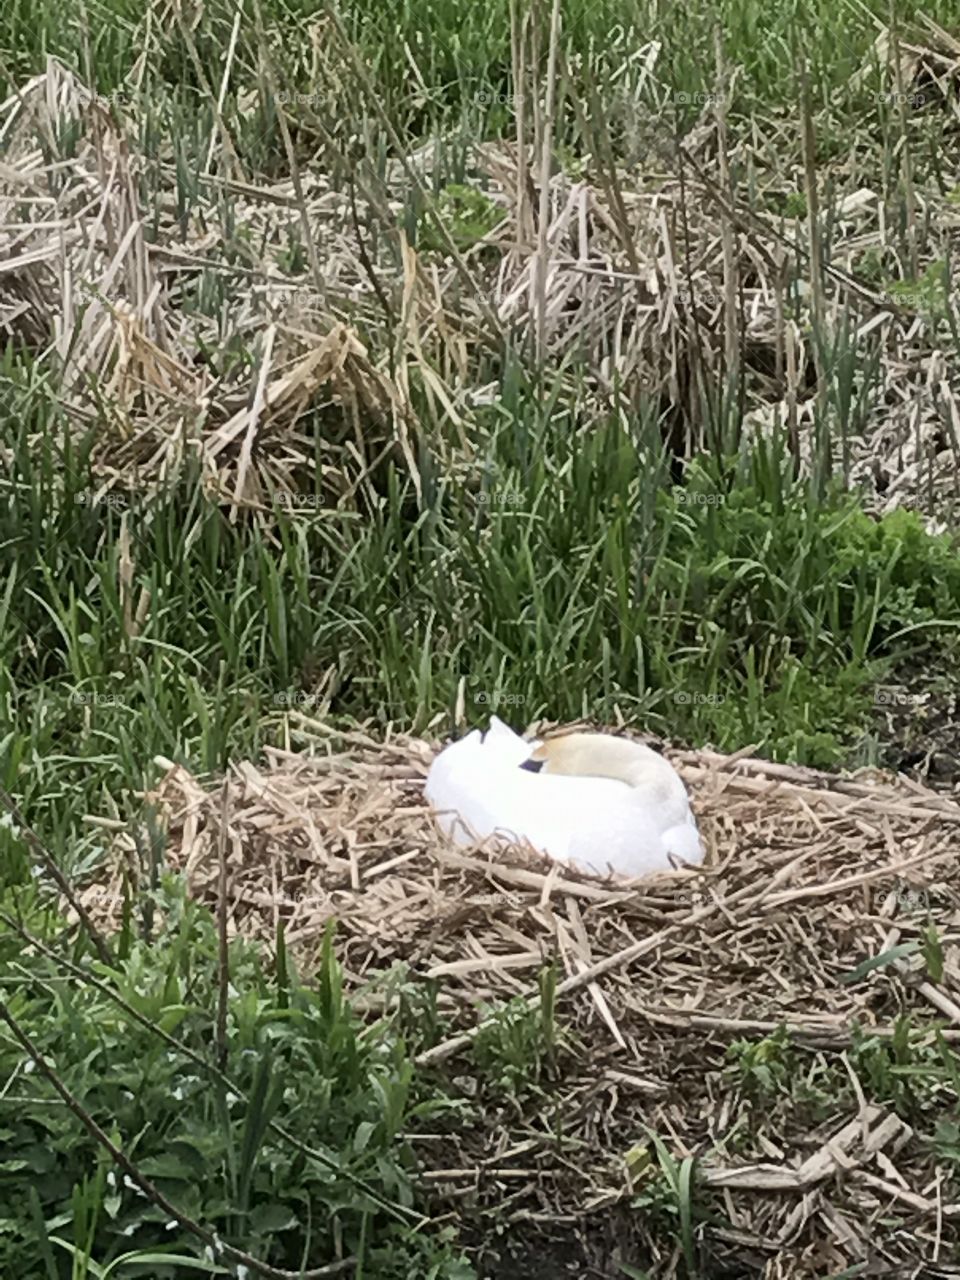 Swan nesting
